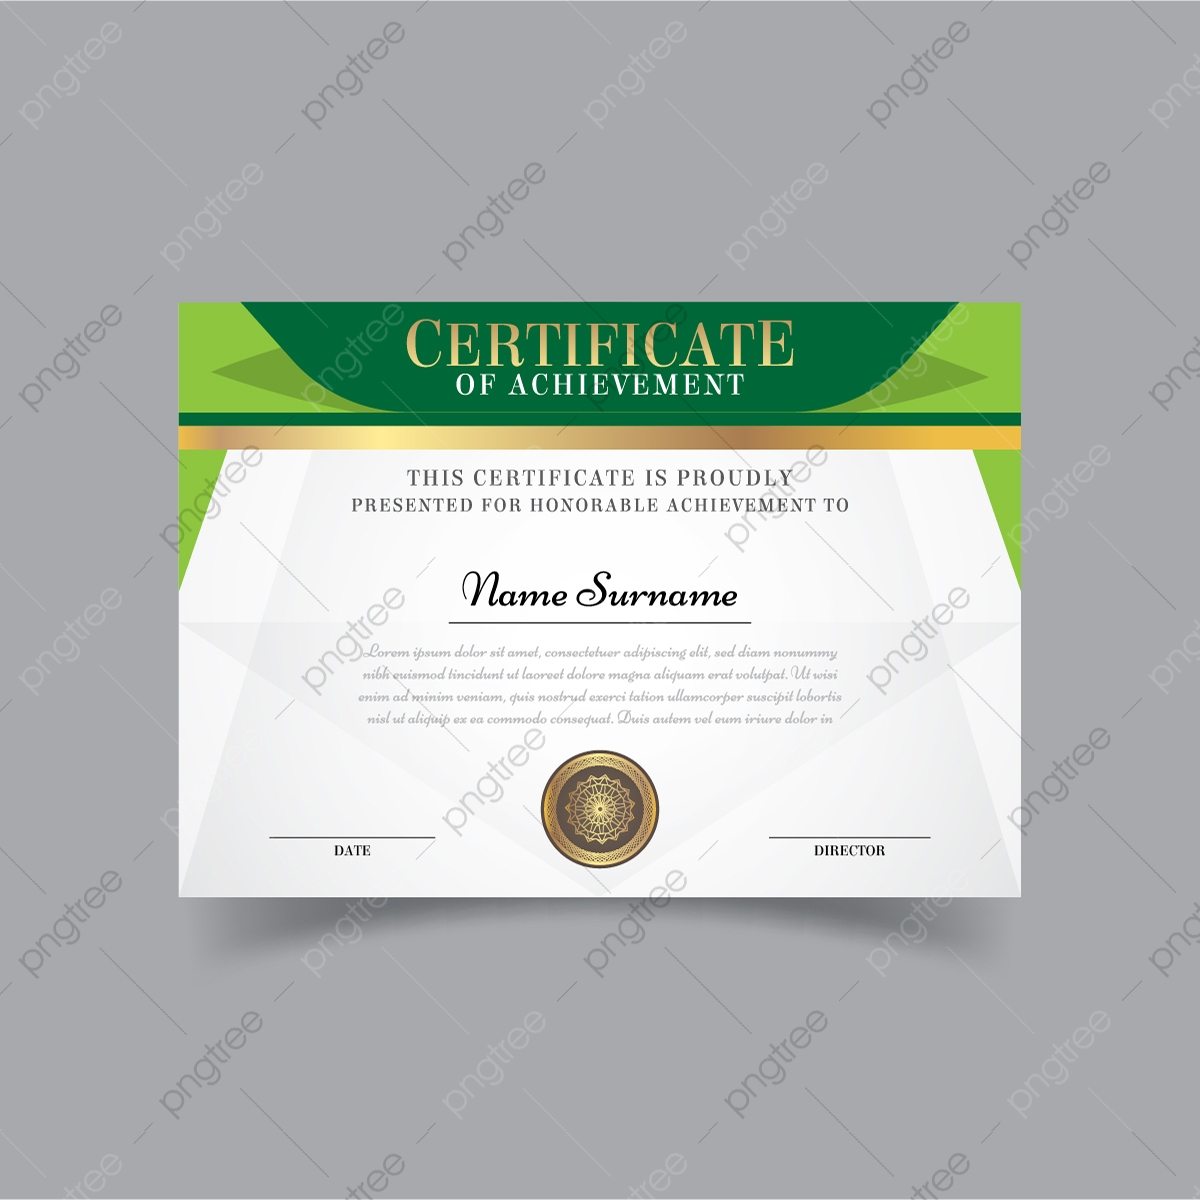 Landscape Certificate Template Modern Design Green Color Gold